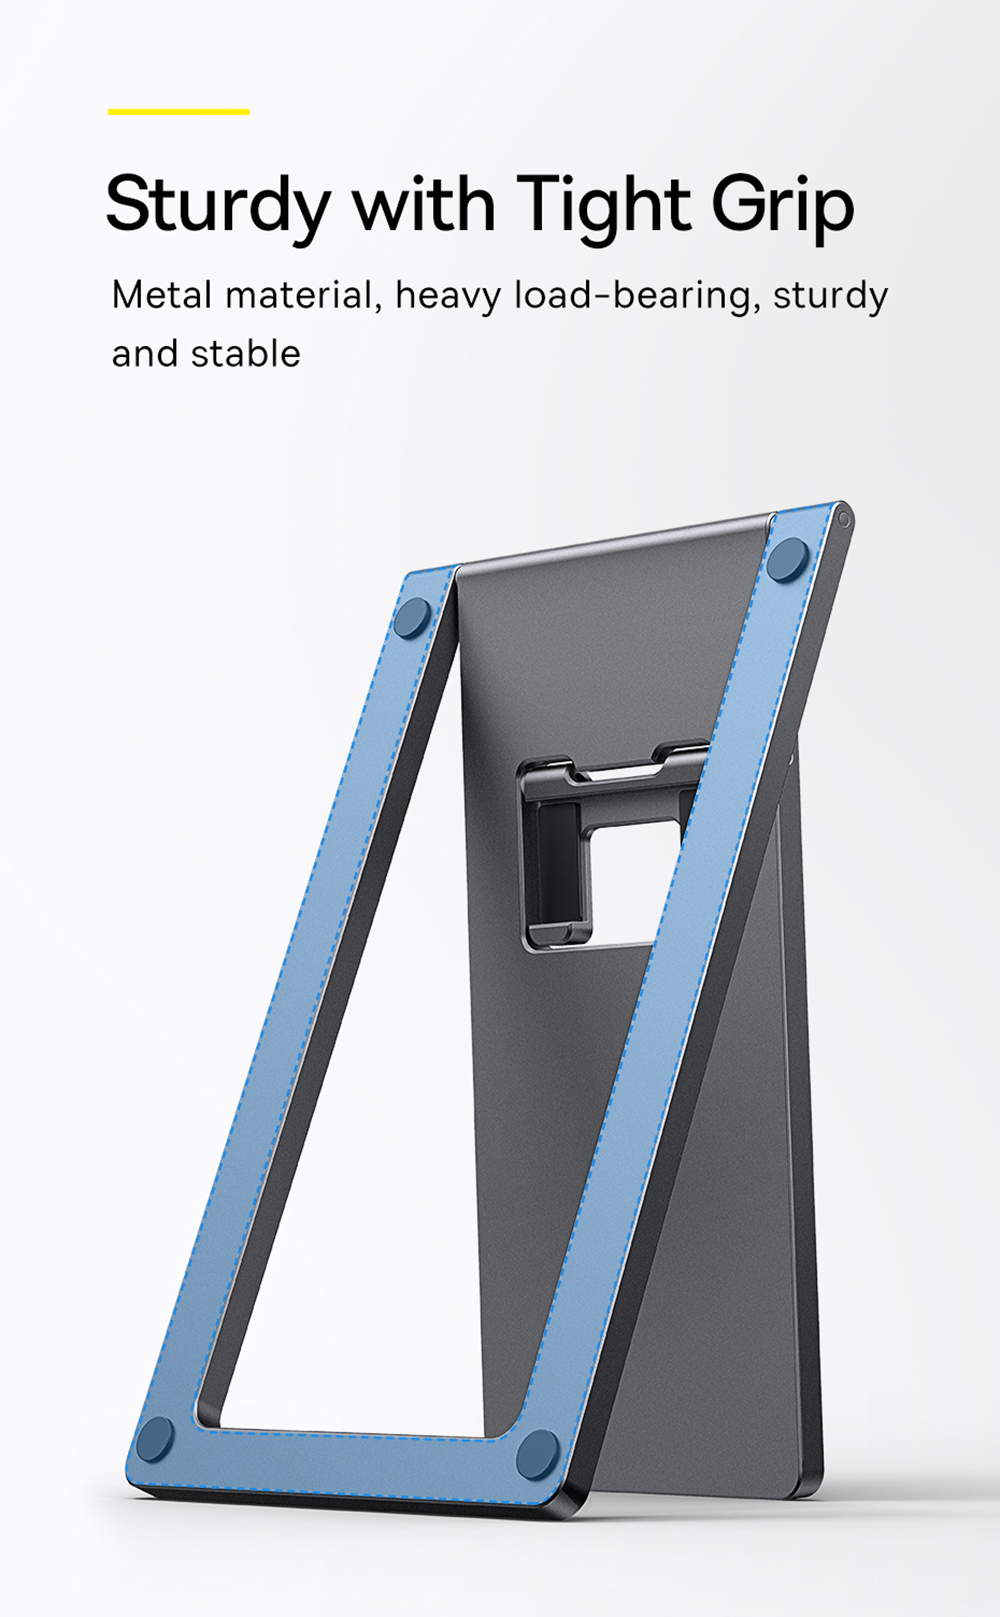 BASEUS-Foldable-Metal-Desktop-Holder-For-Tablet-Mobile-Phone-Flat-Stand-Notebook-Stand-Laptop-Suppor-1932920-6